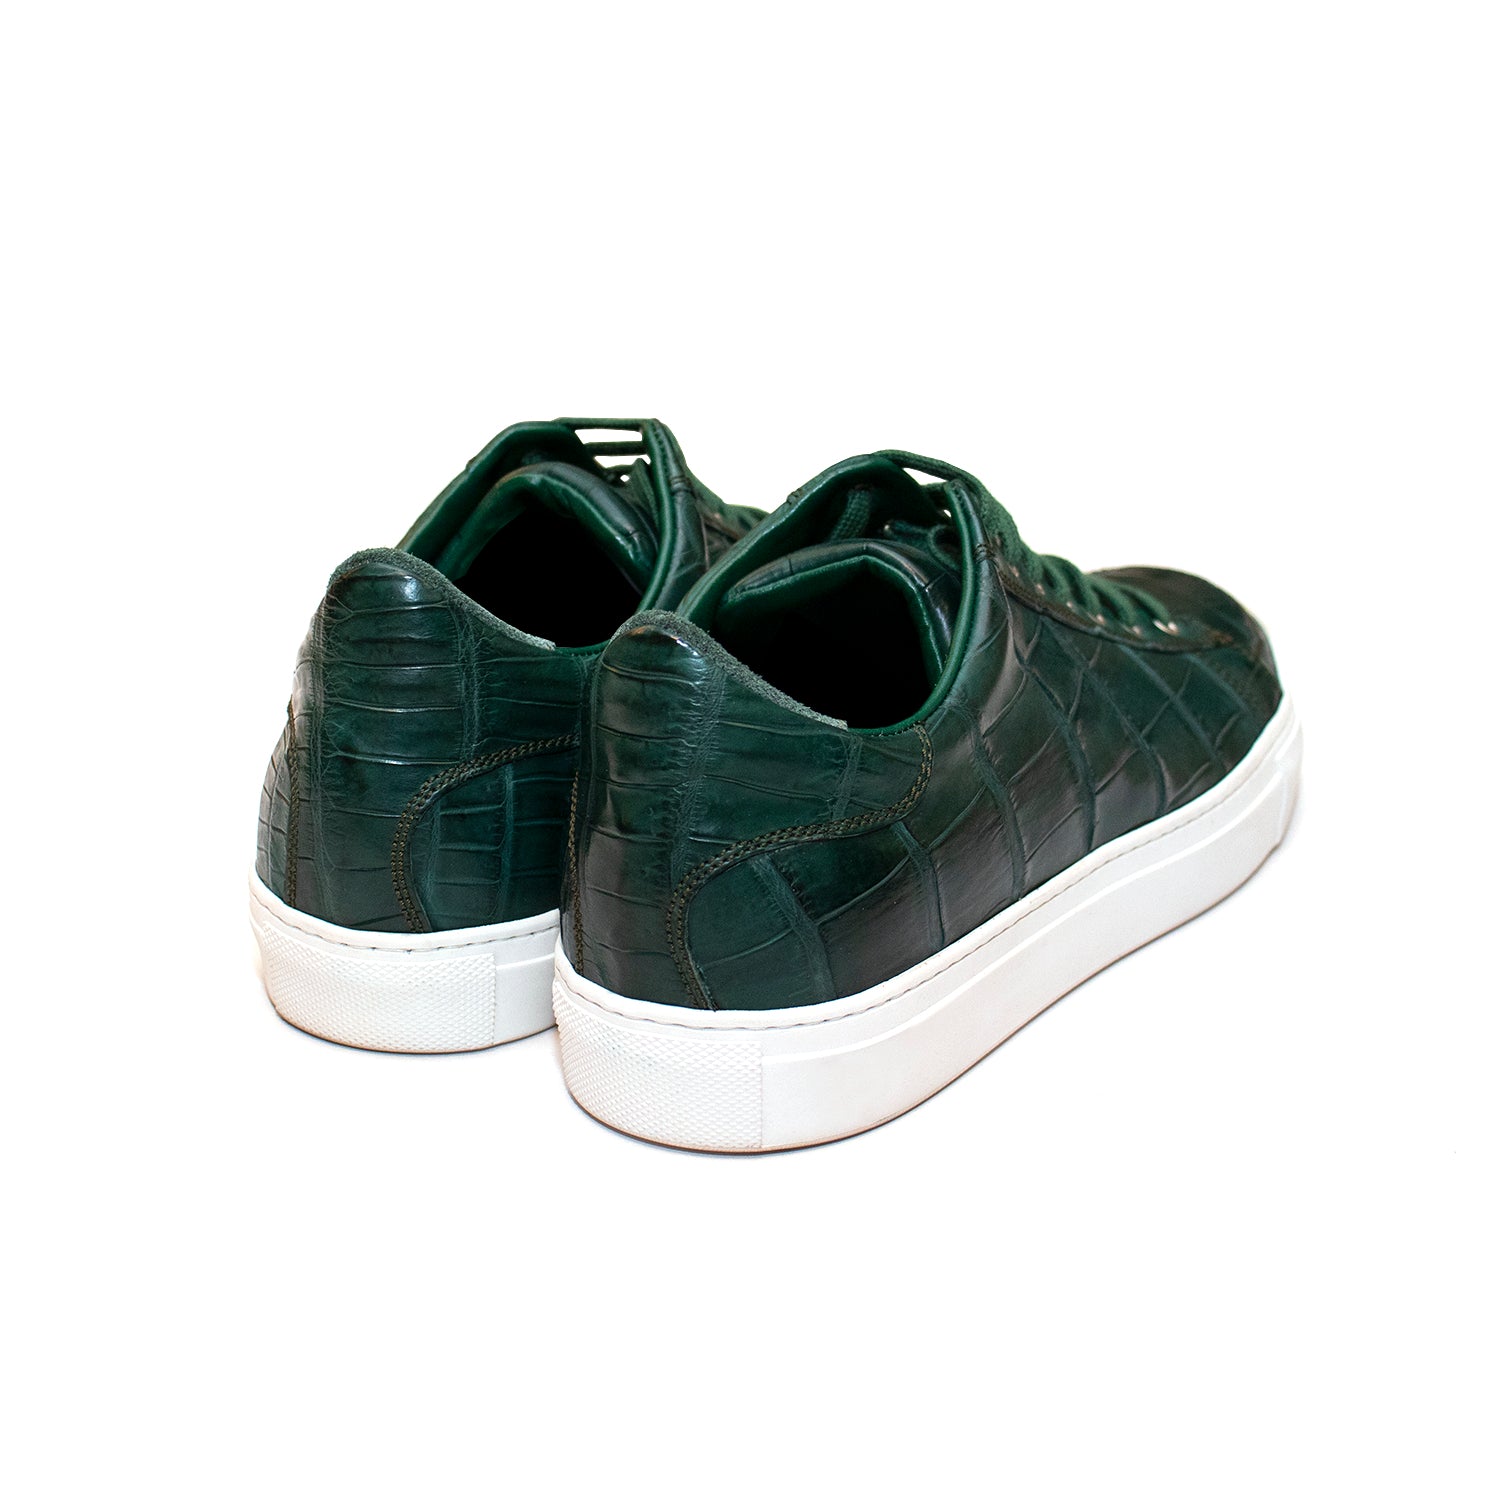 New York Green Sneakers